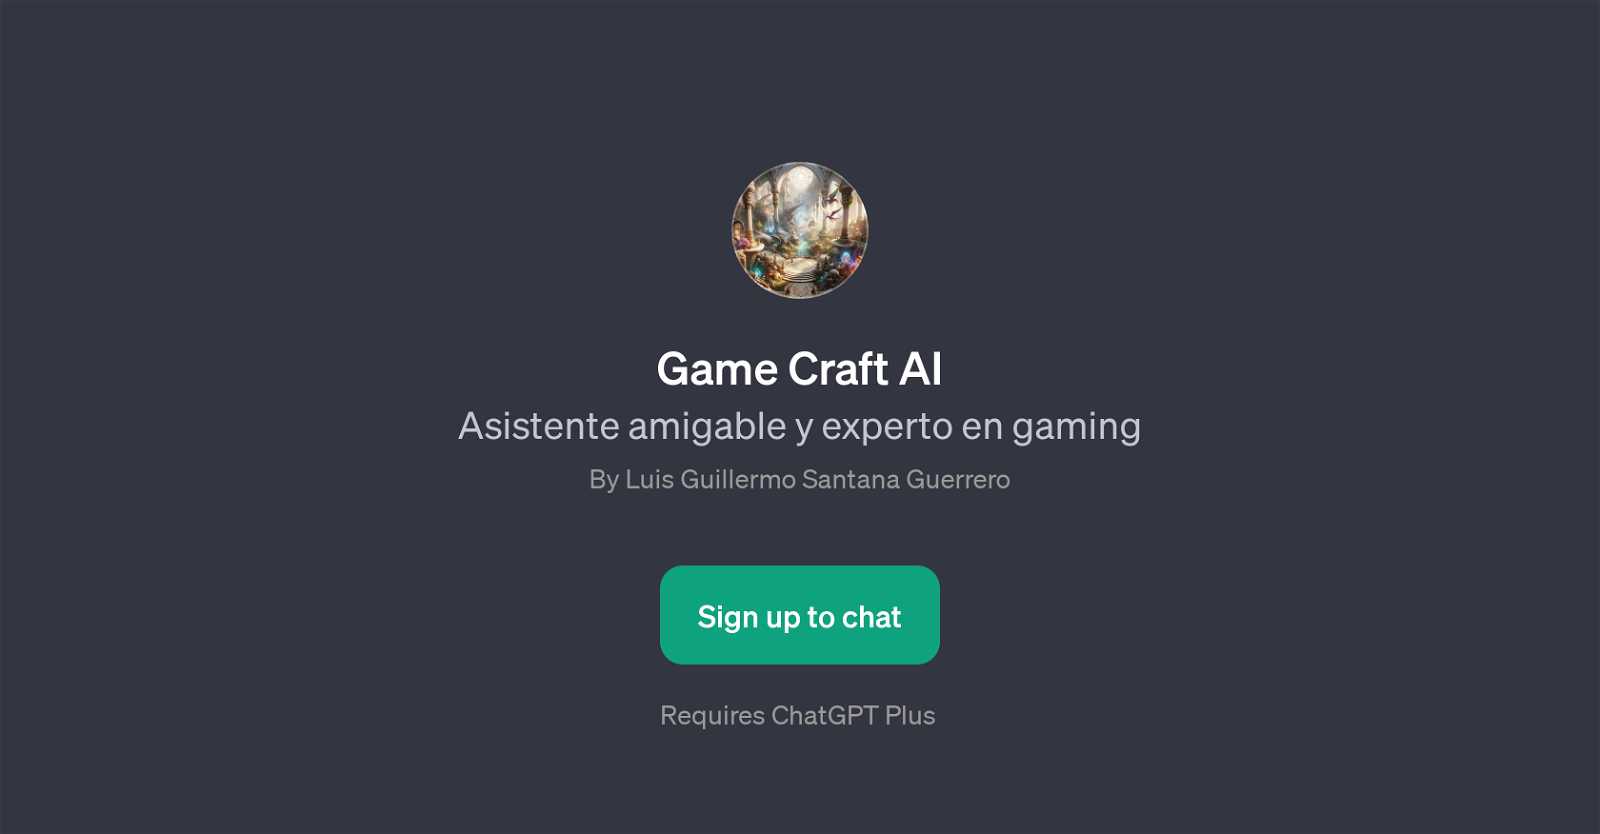 Game Craft AI website